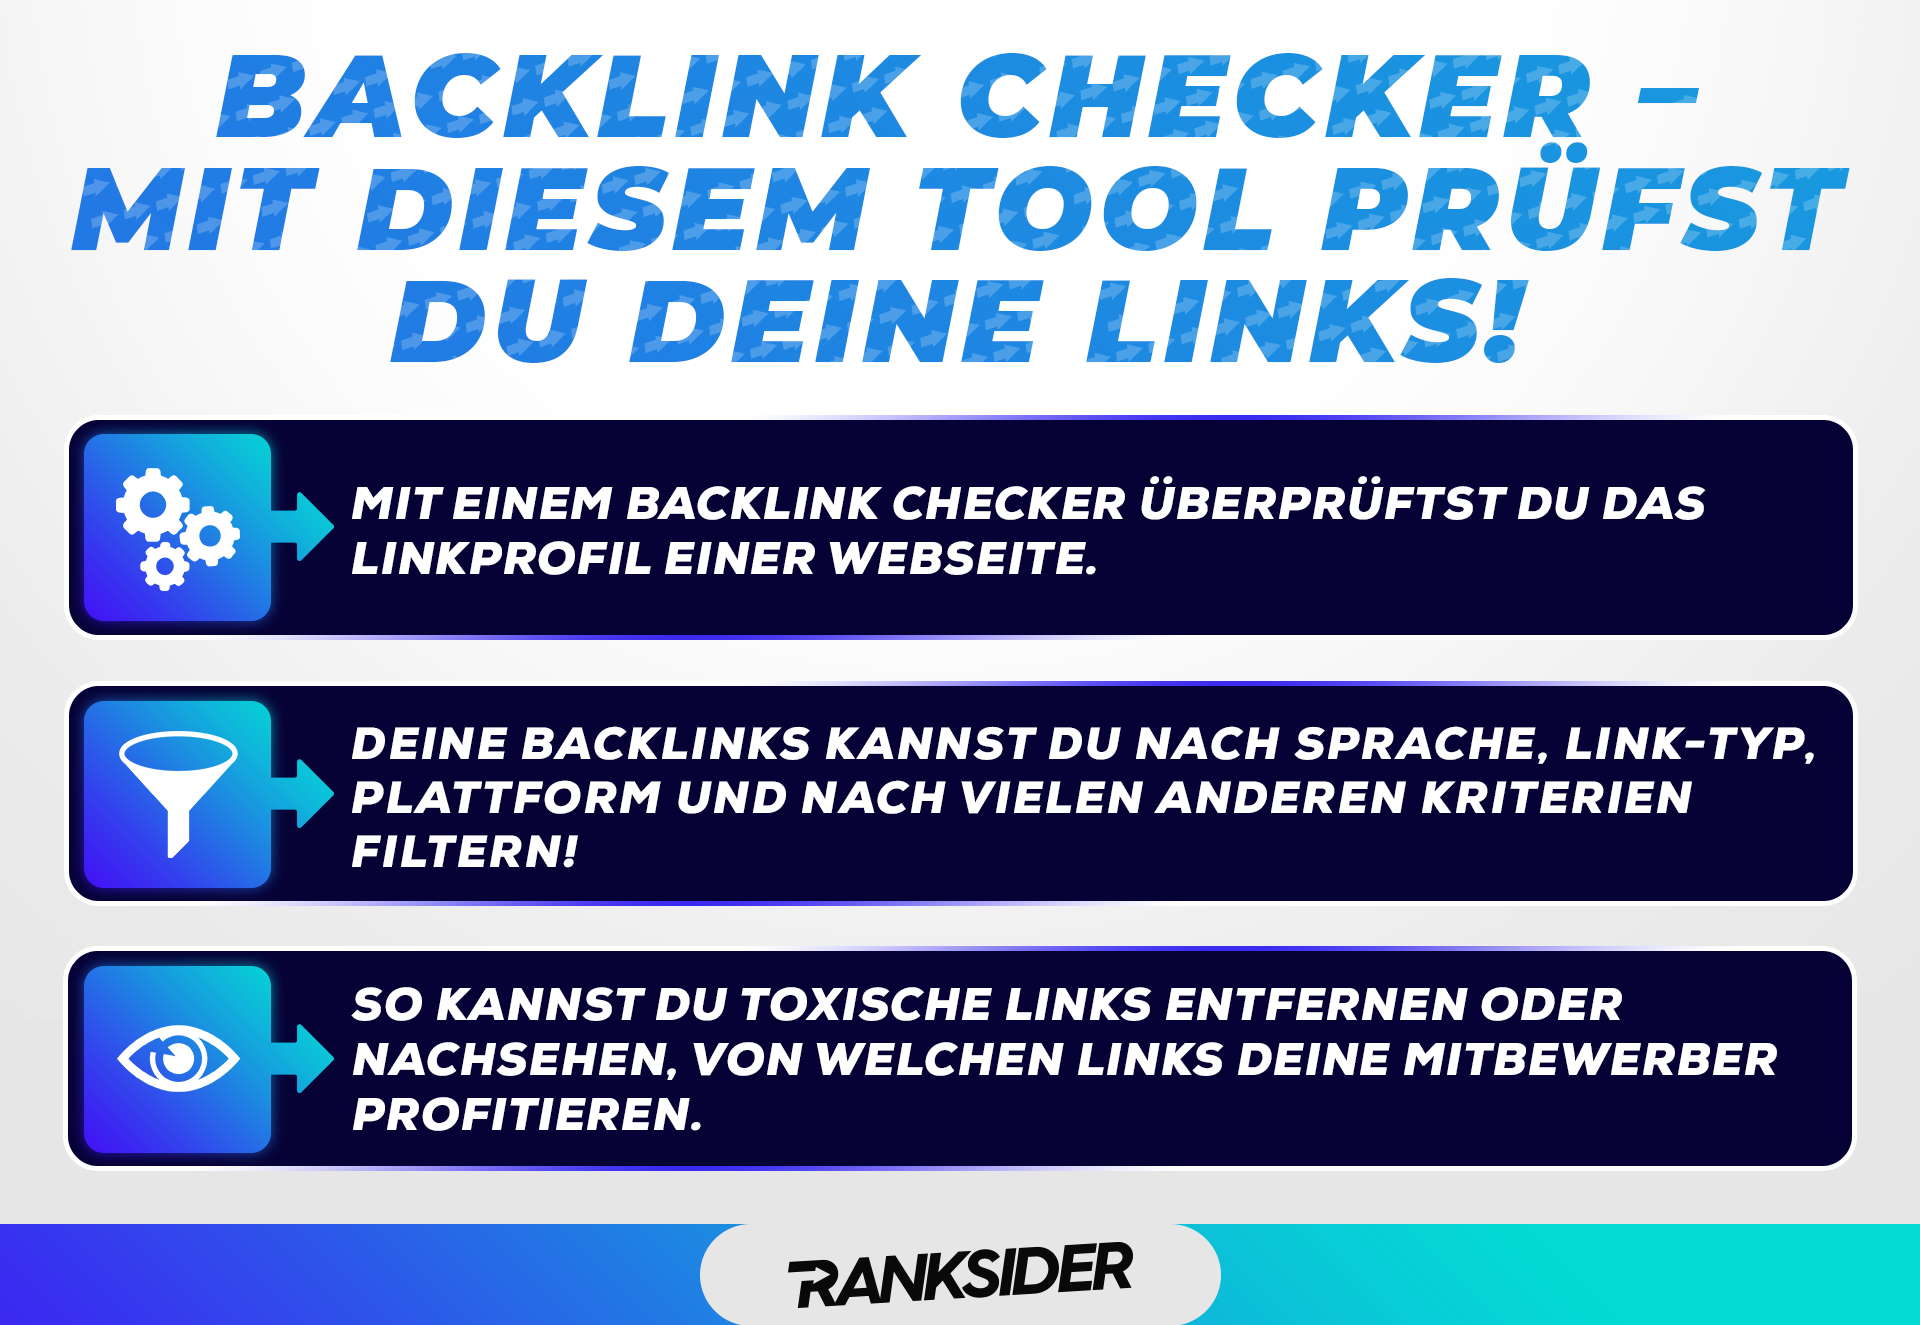 Backlink Checker, kostenlosen Backlink, Website, Google, Ranking, Linkprofil, Backlink Tool, Backlink Profil, Backlink Analyse, SEO, Linkaufbau, Backlink Check, Suchmaschinen Rankings, Suchmaschinenoptimierung